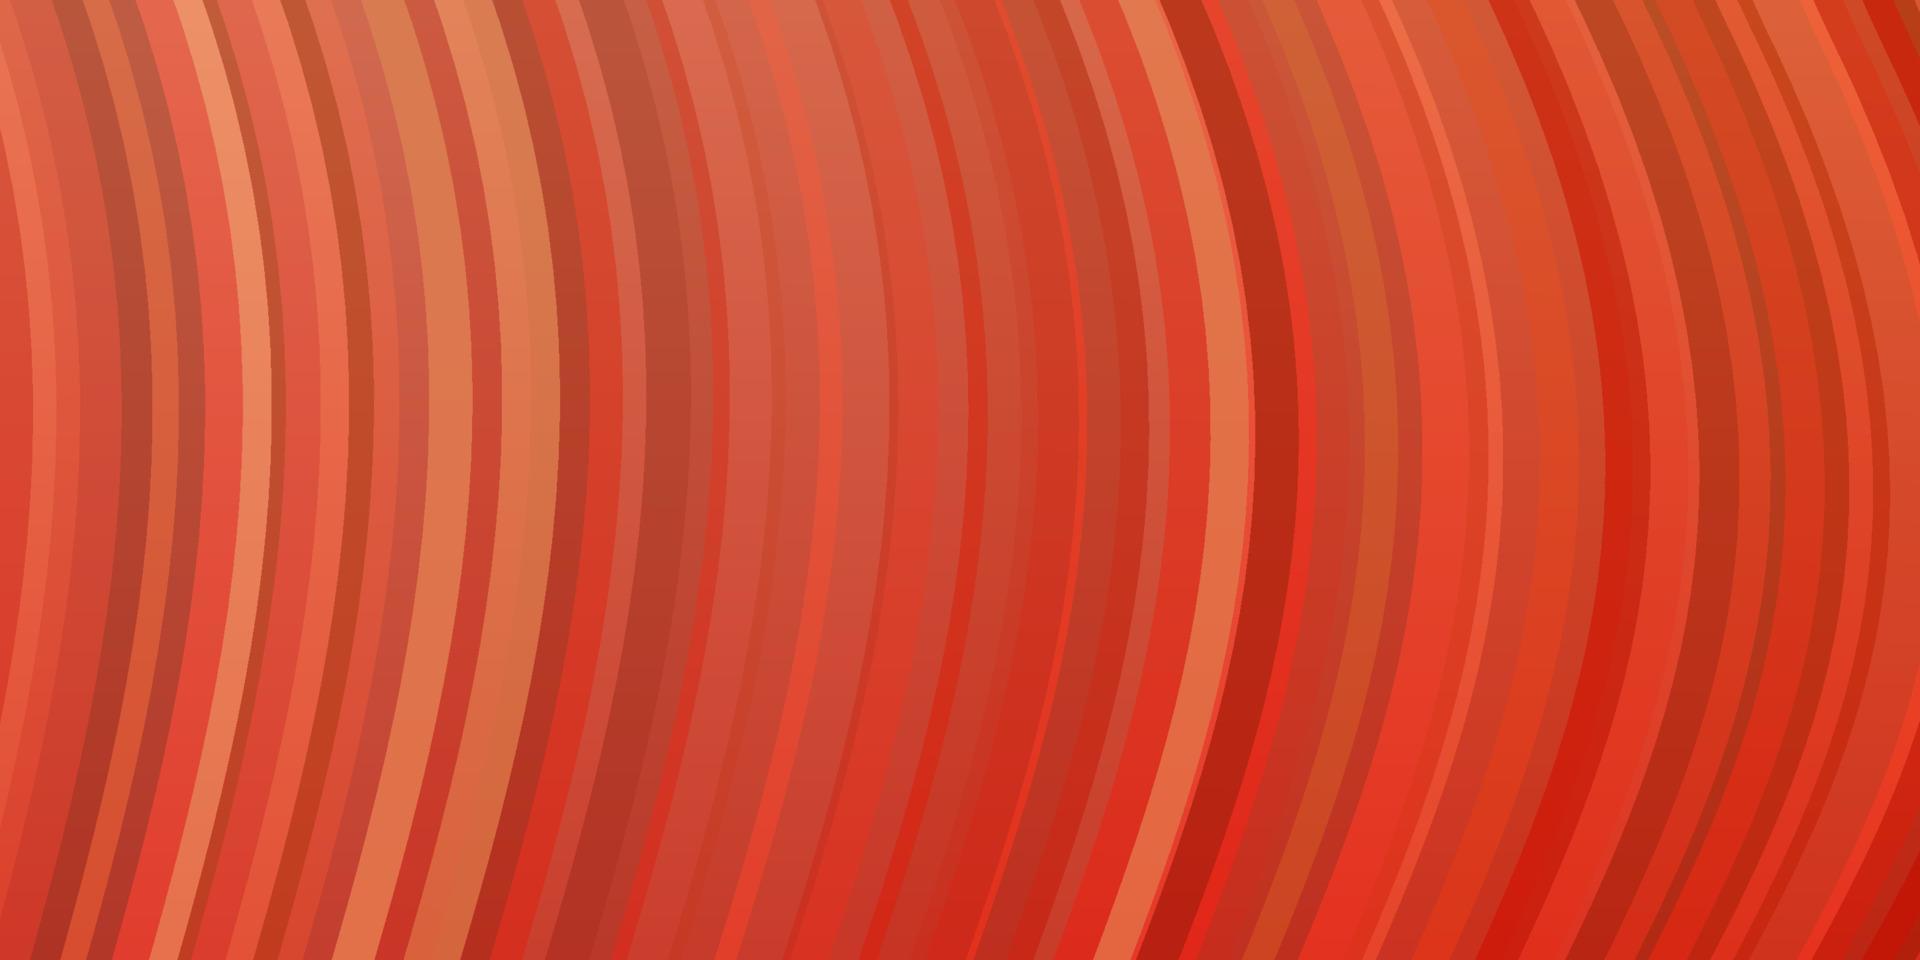 diseño de vector rojo claro con arco circular.